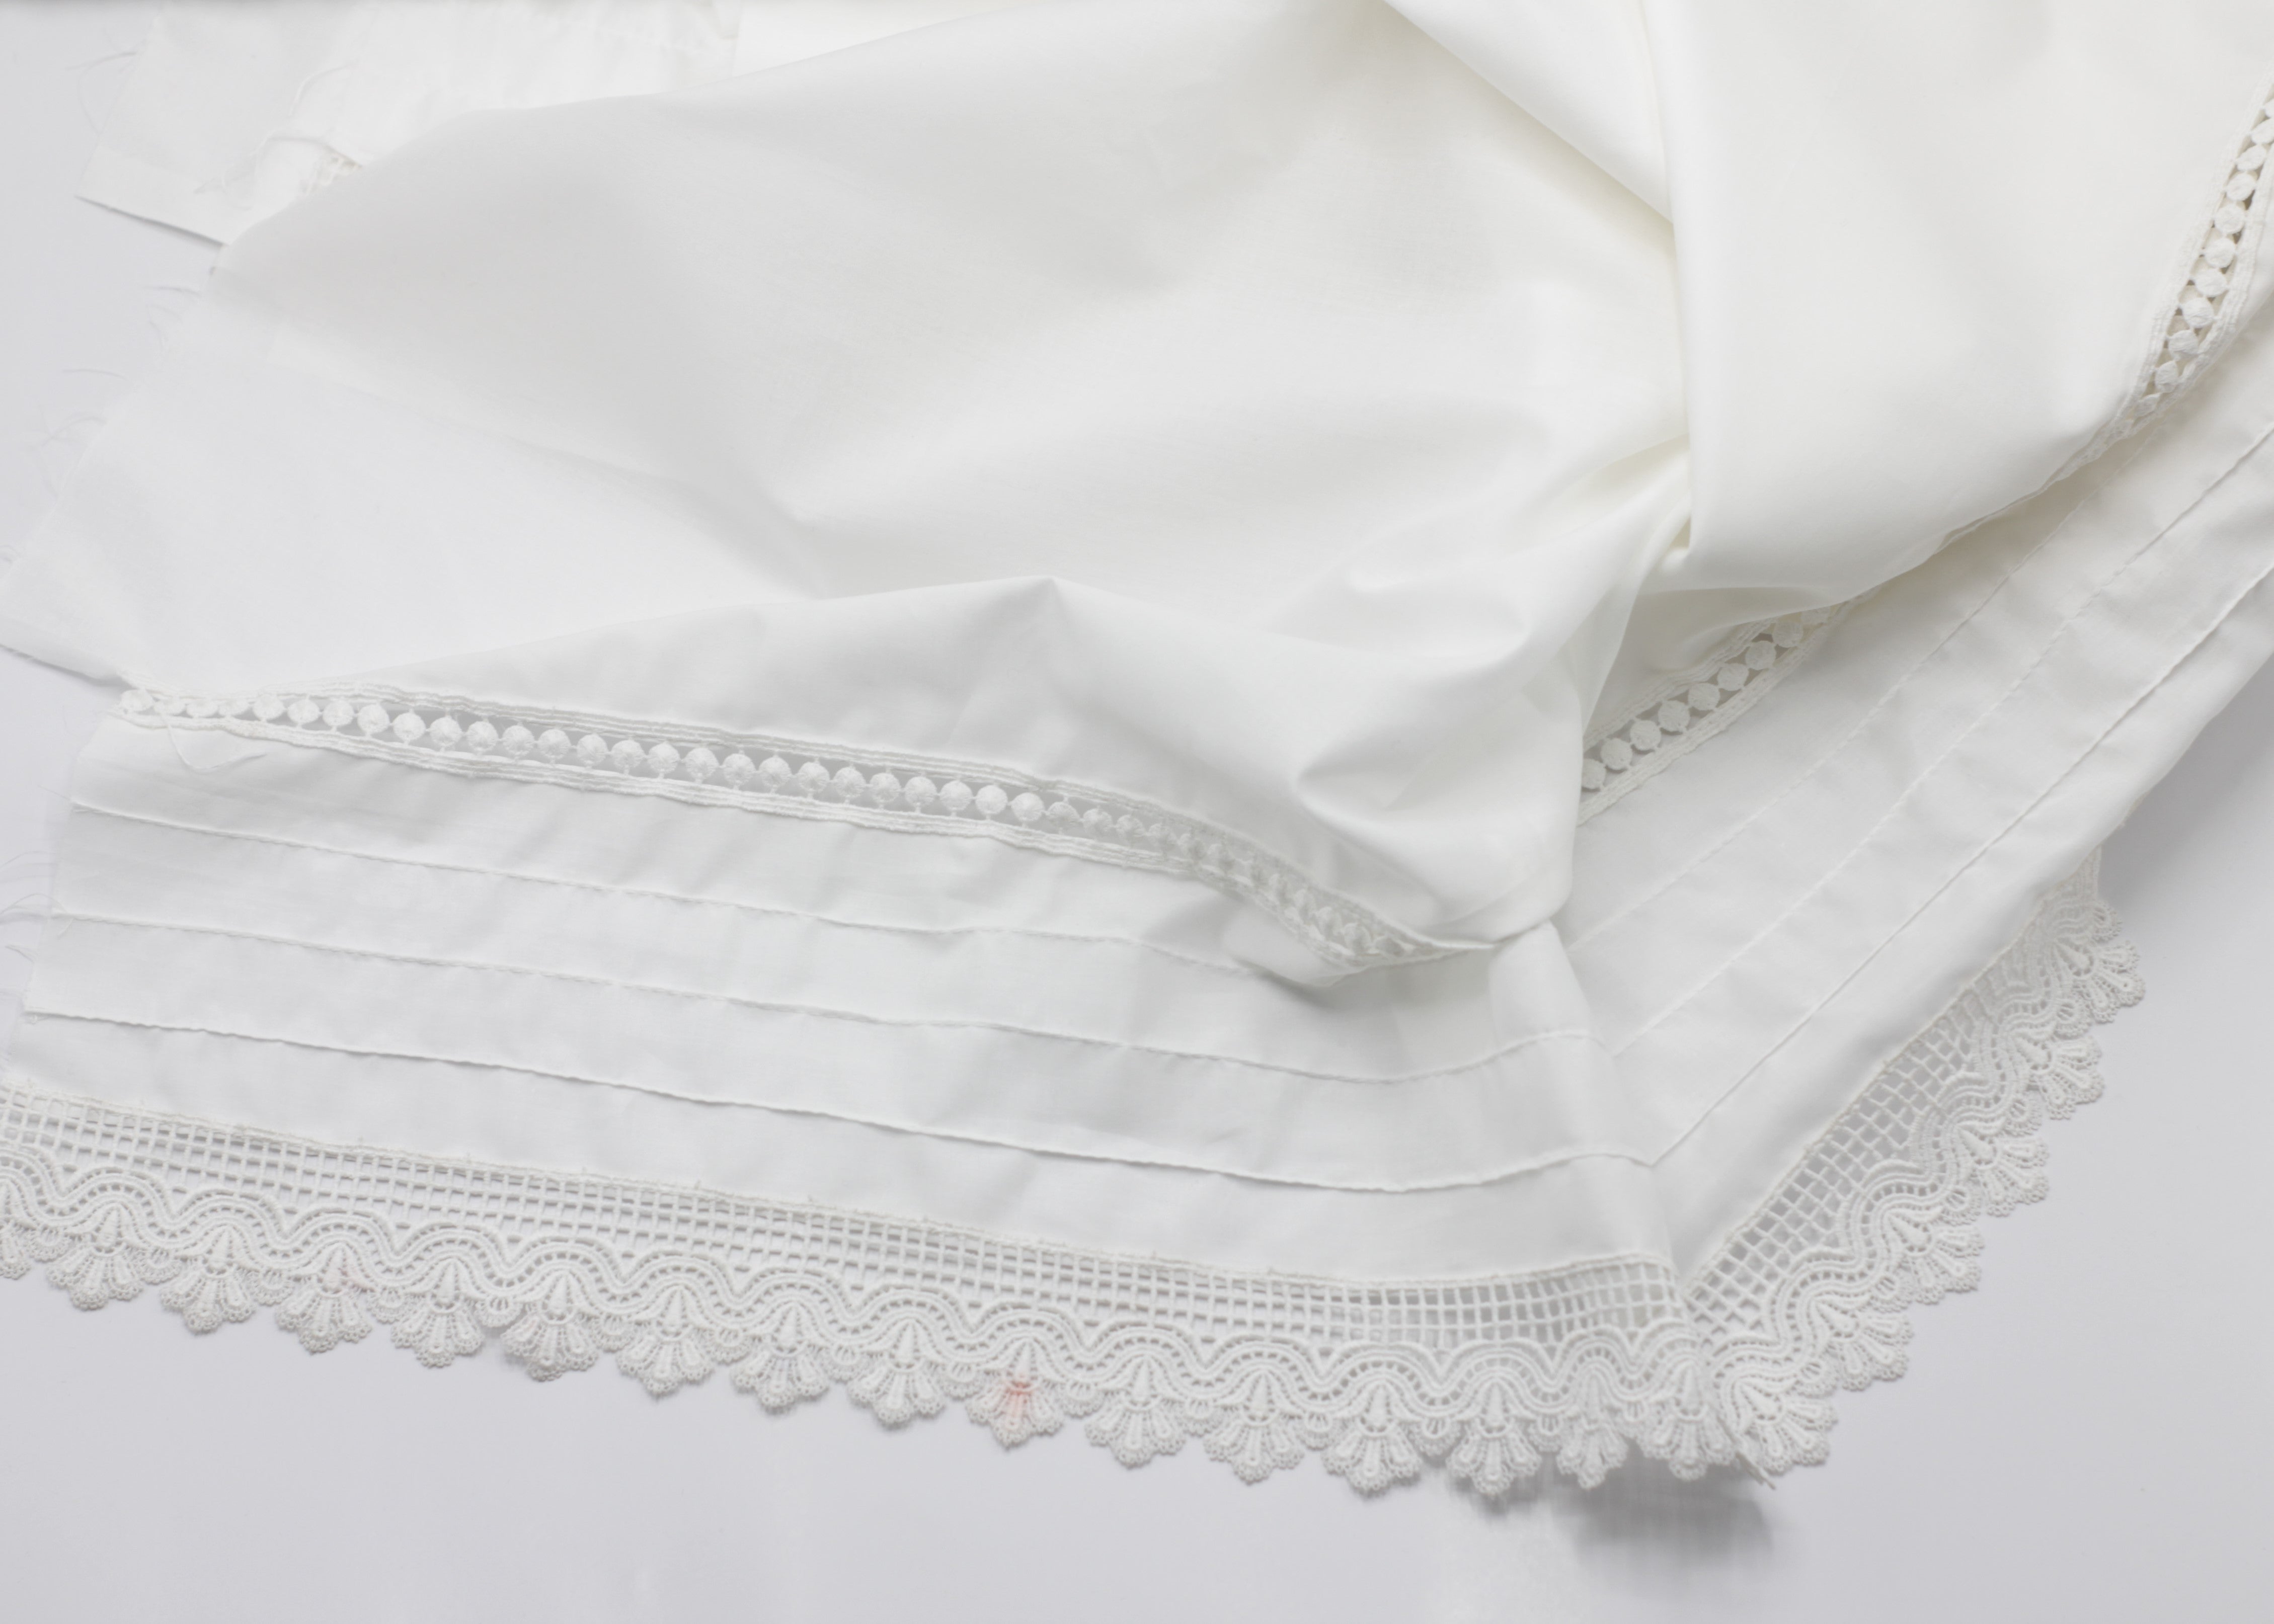 Cotton trouser with border laces